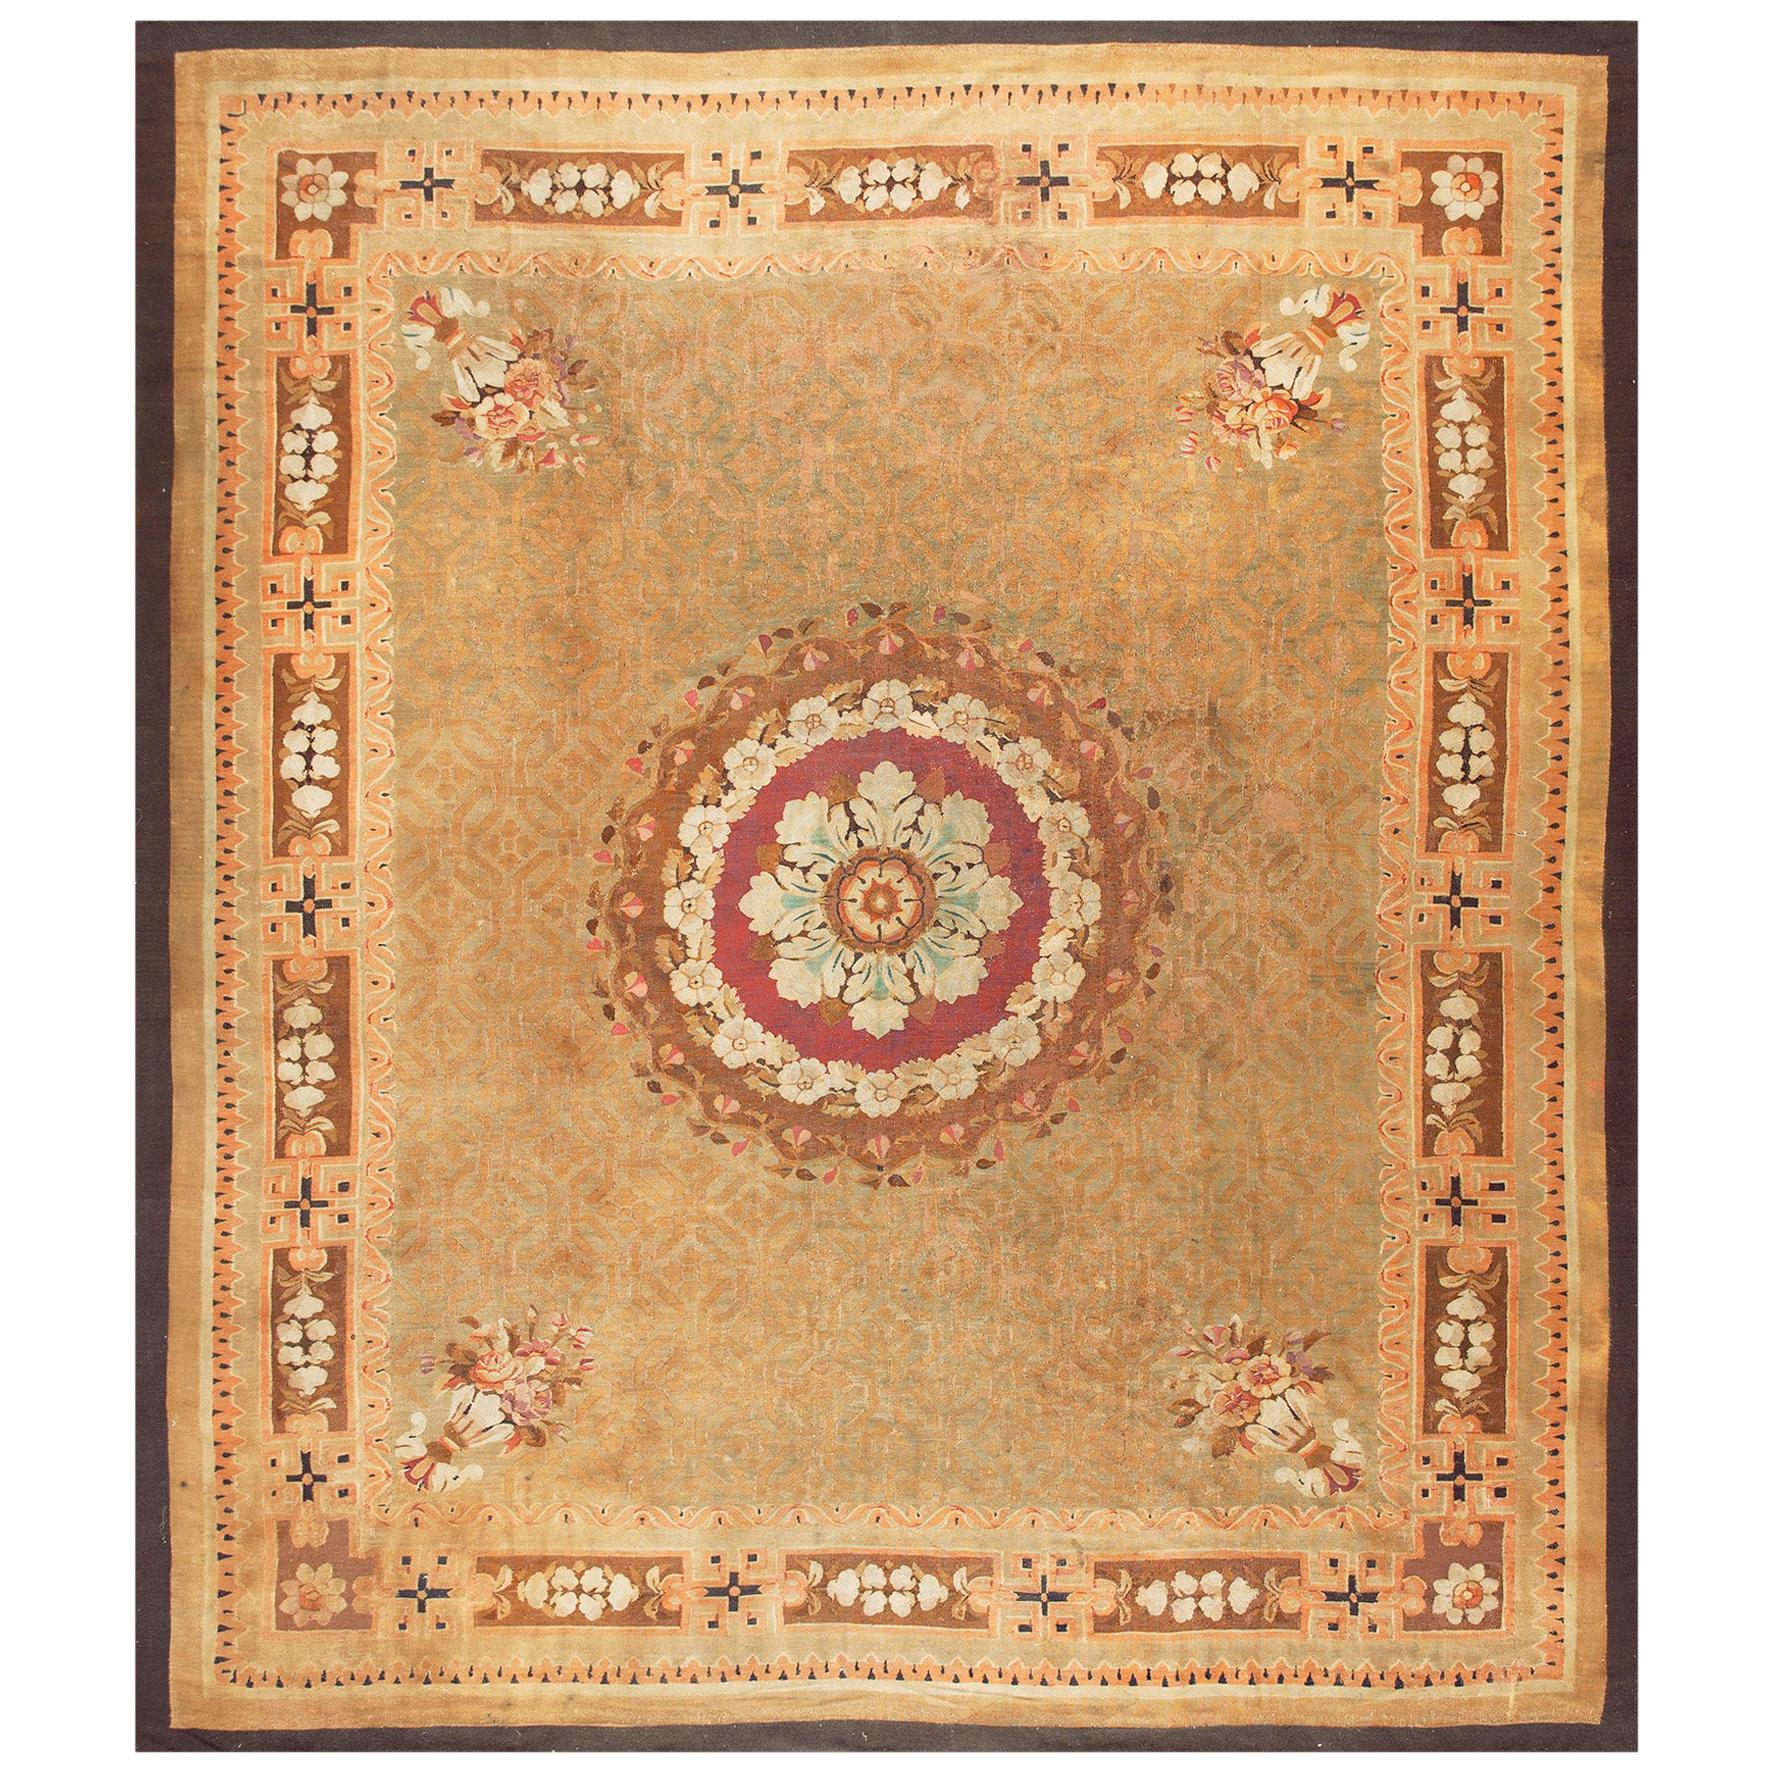 Antique French Aubusson Carpet - 1st Empire Period